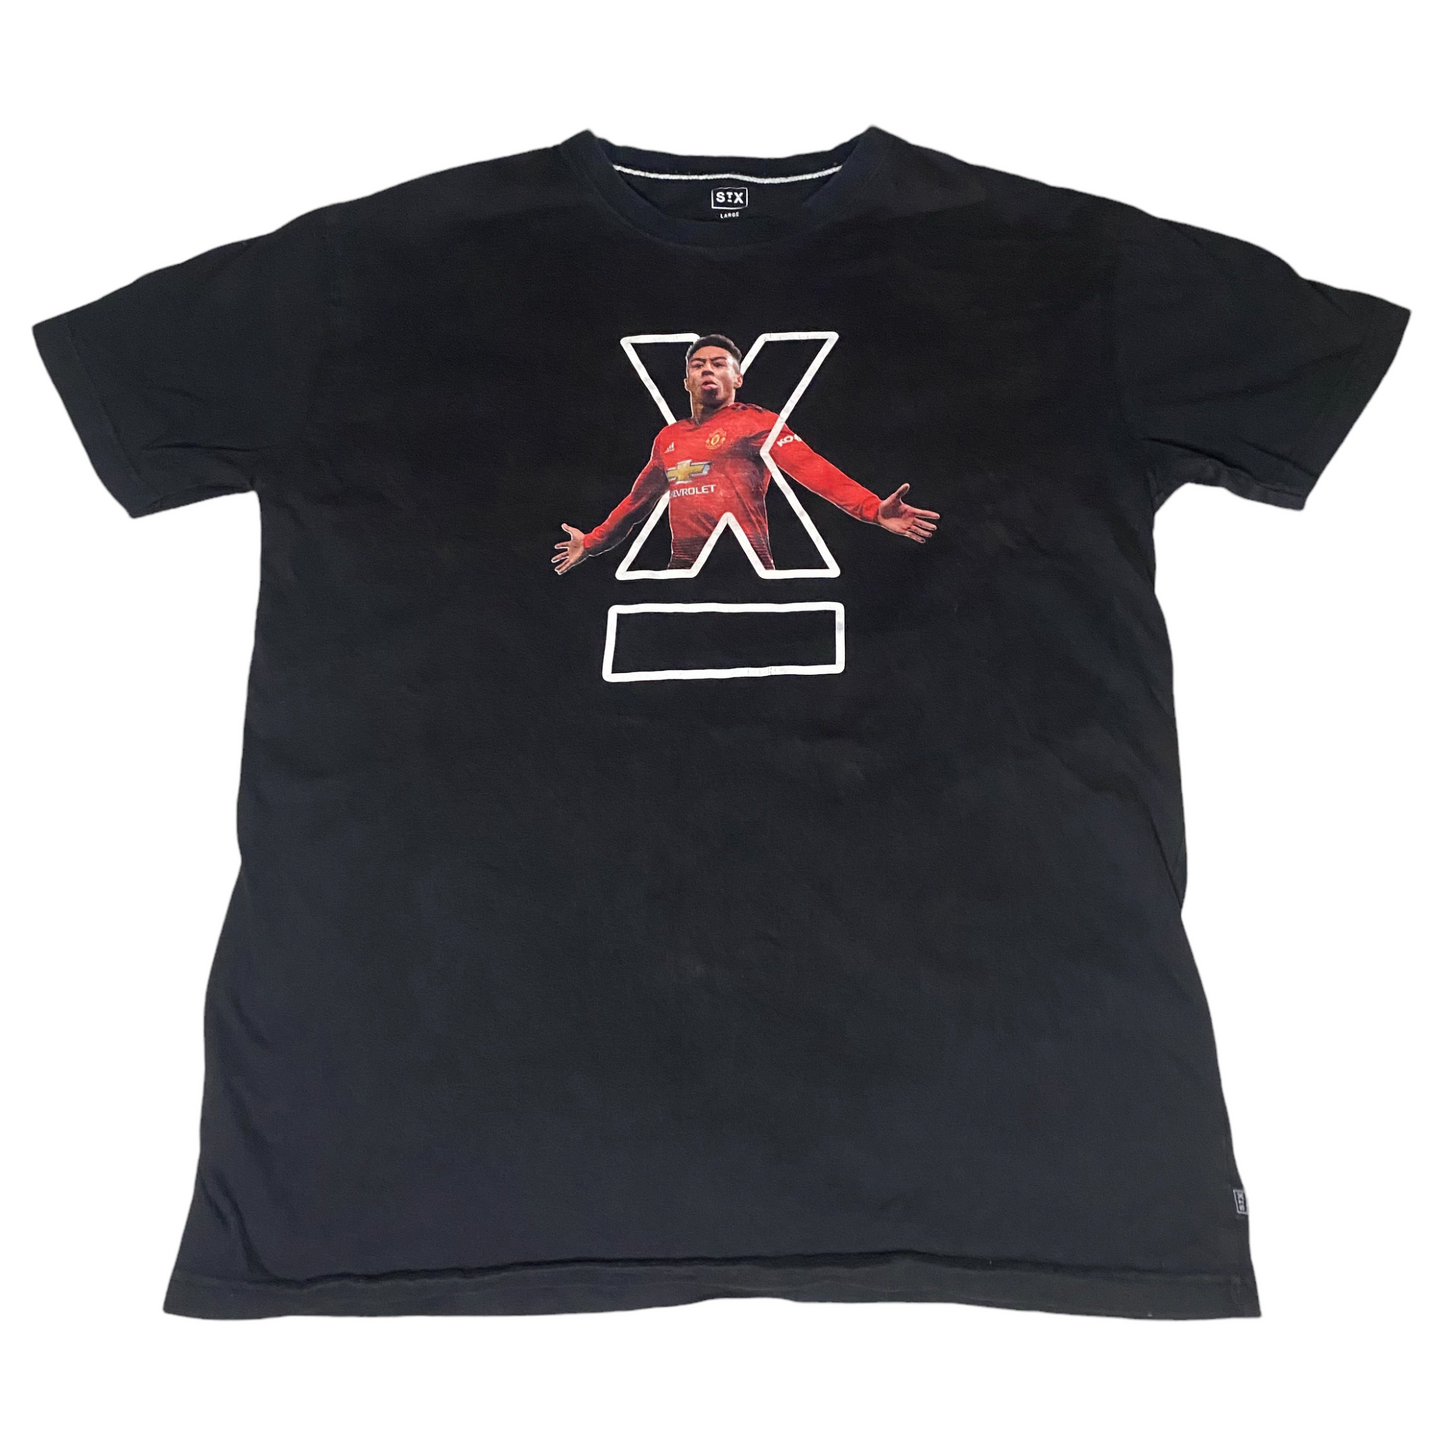 Streetx Manchester United Jesse Lingard T-Shirt